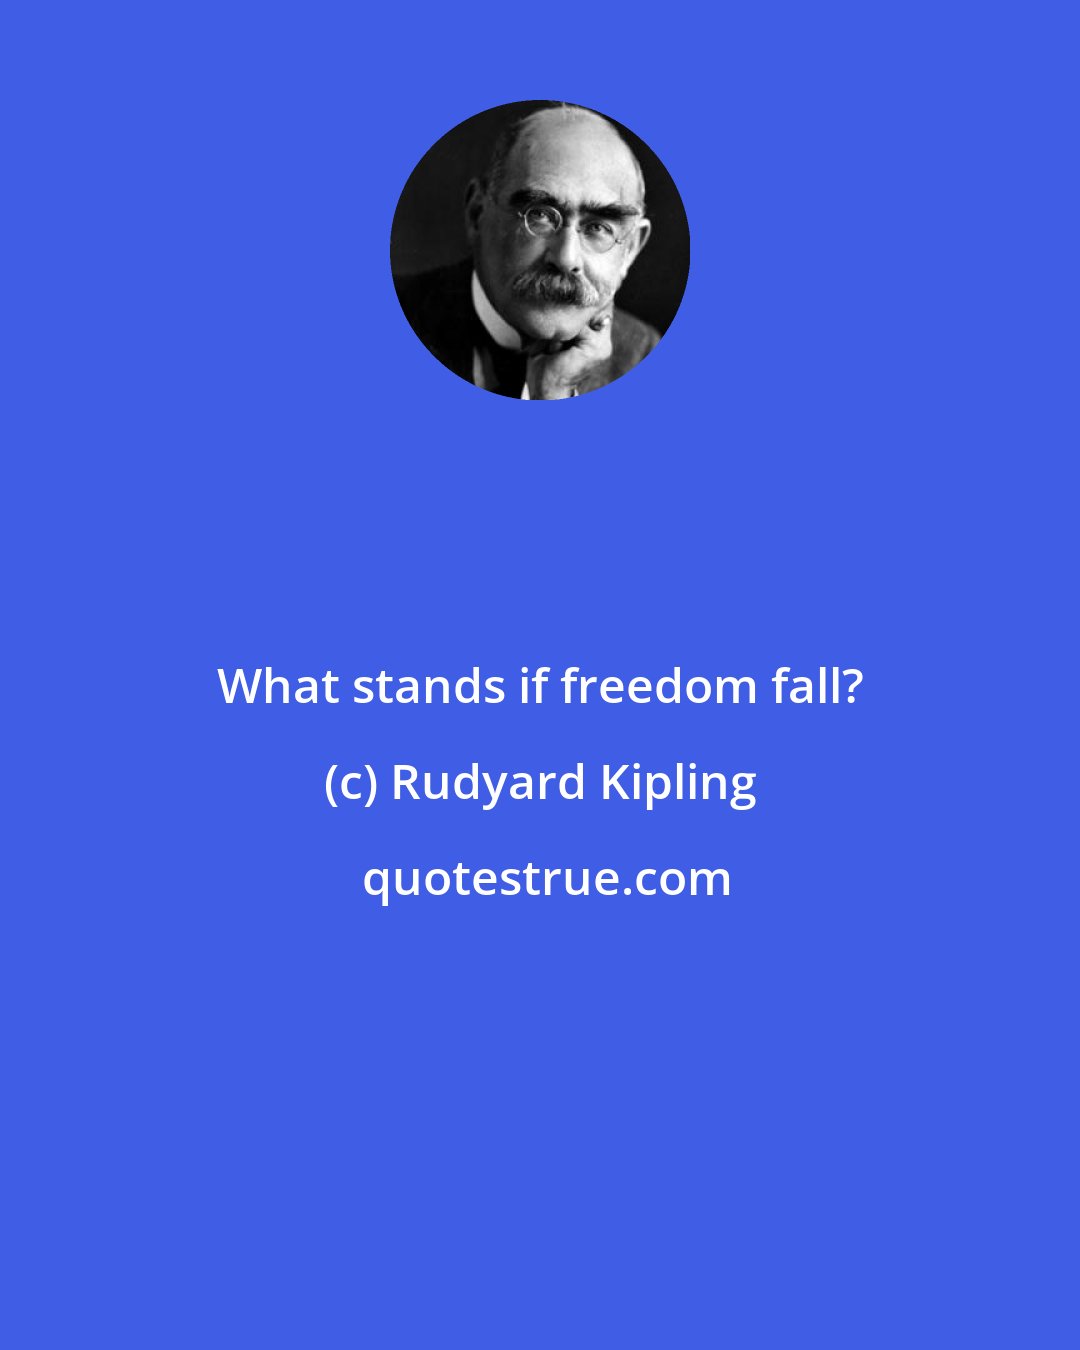 Rudyard Kipling: What stands if freedom fall?